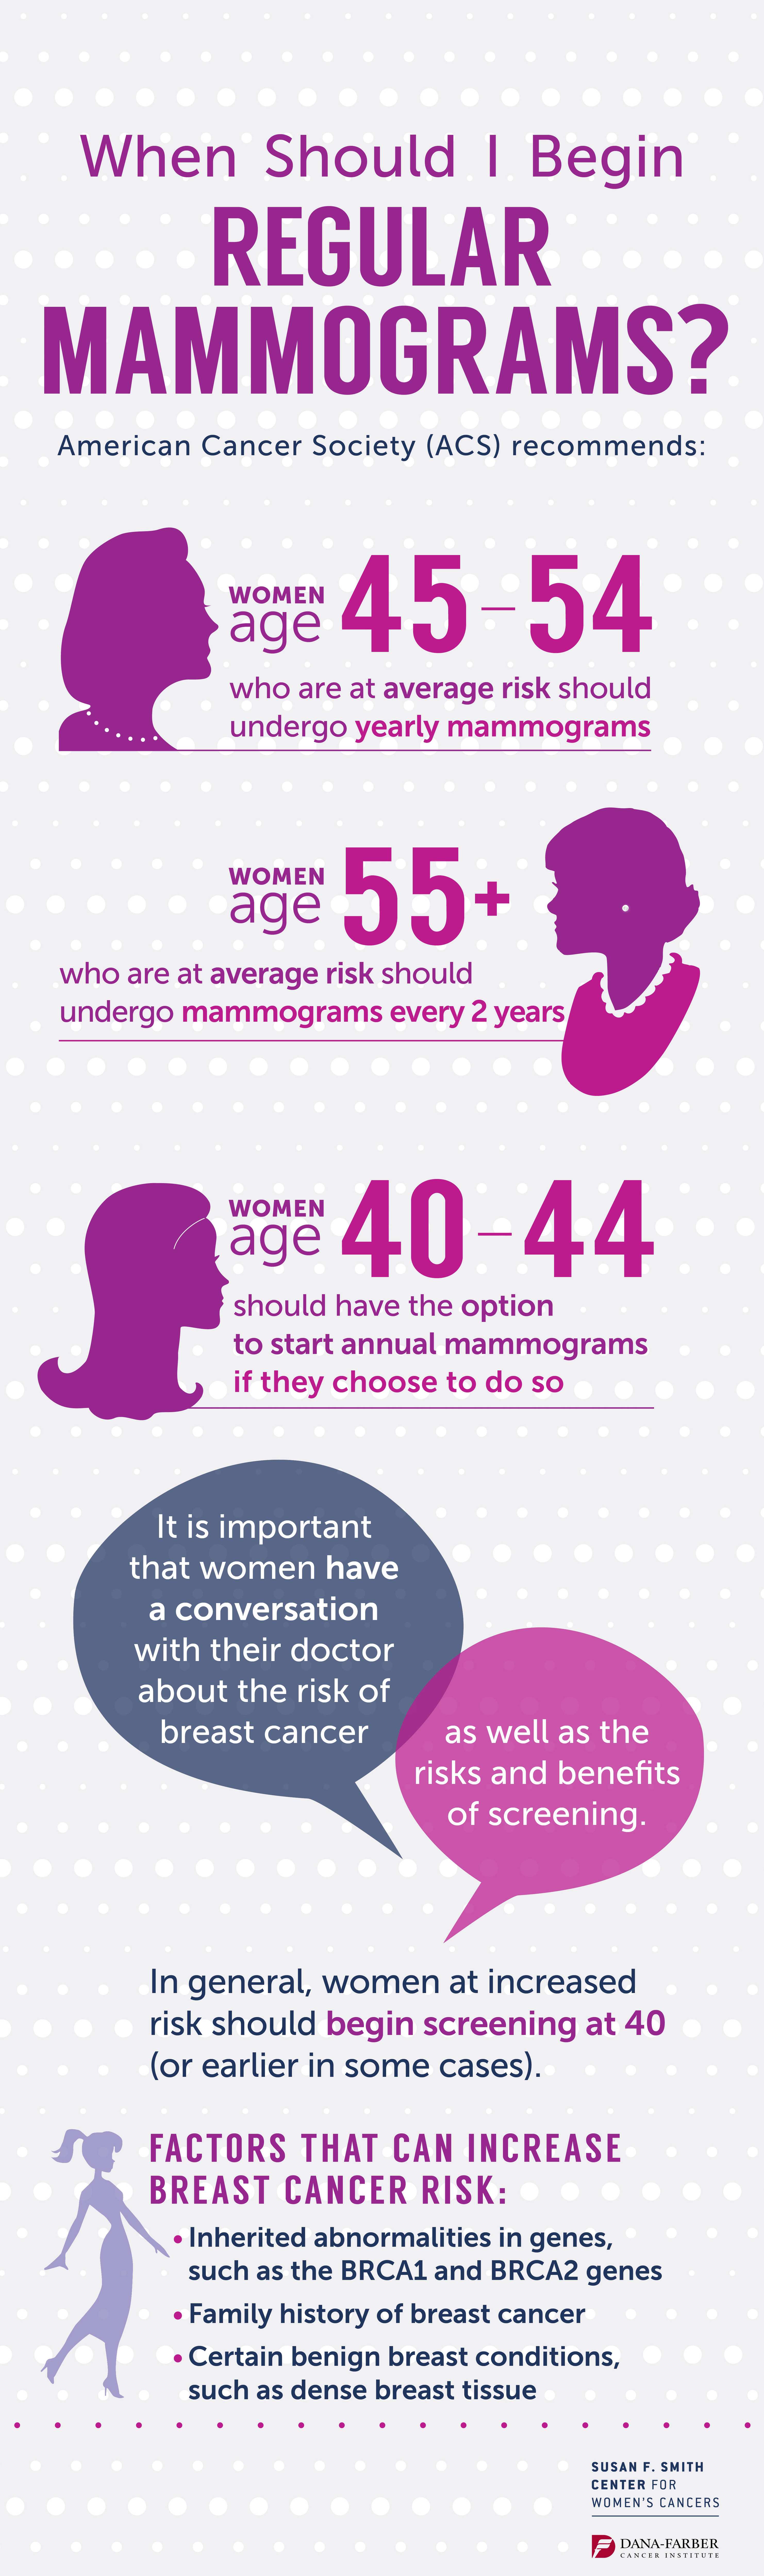 When Should I Begin Regular Mammograms Infographic Dana Farber